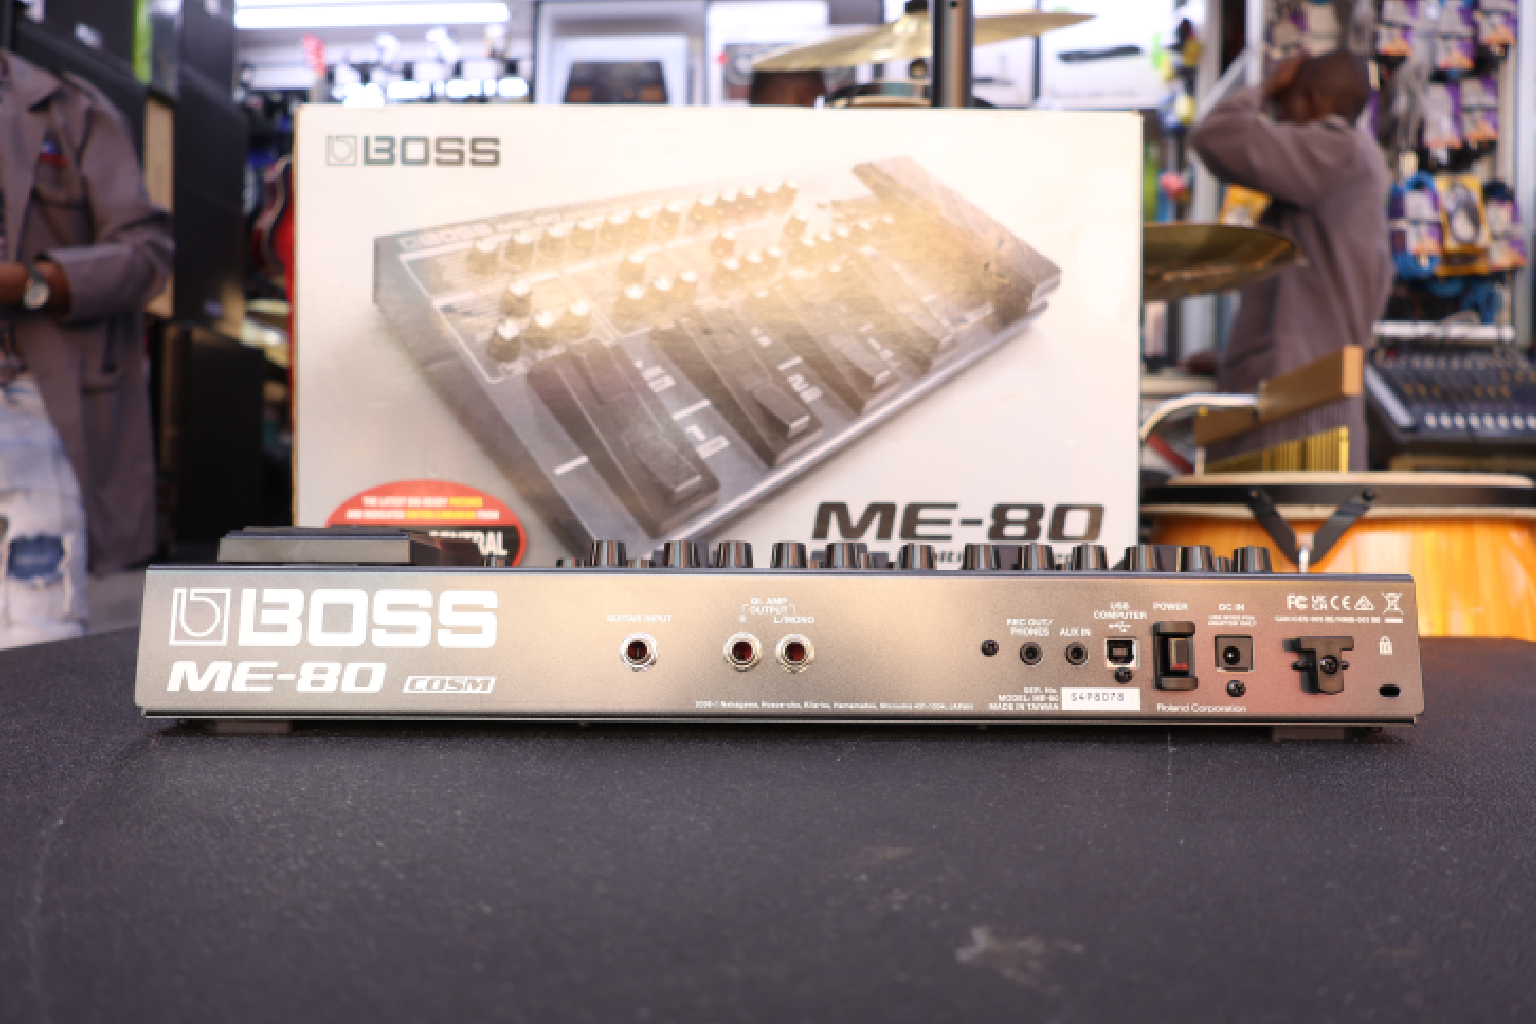 ME-80 effects processor